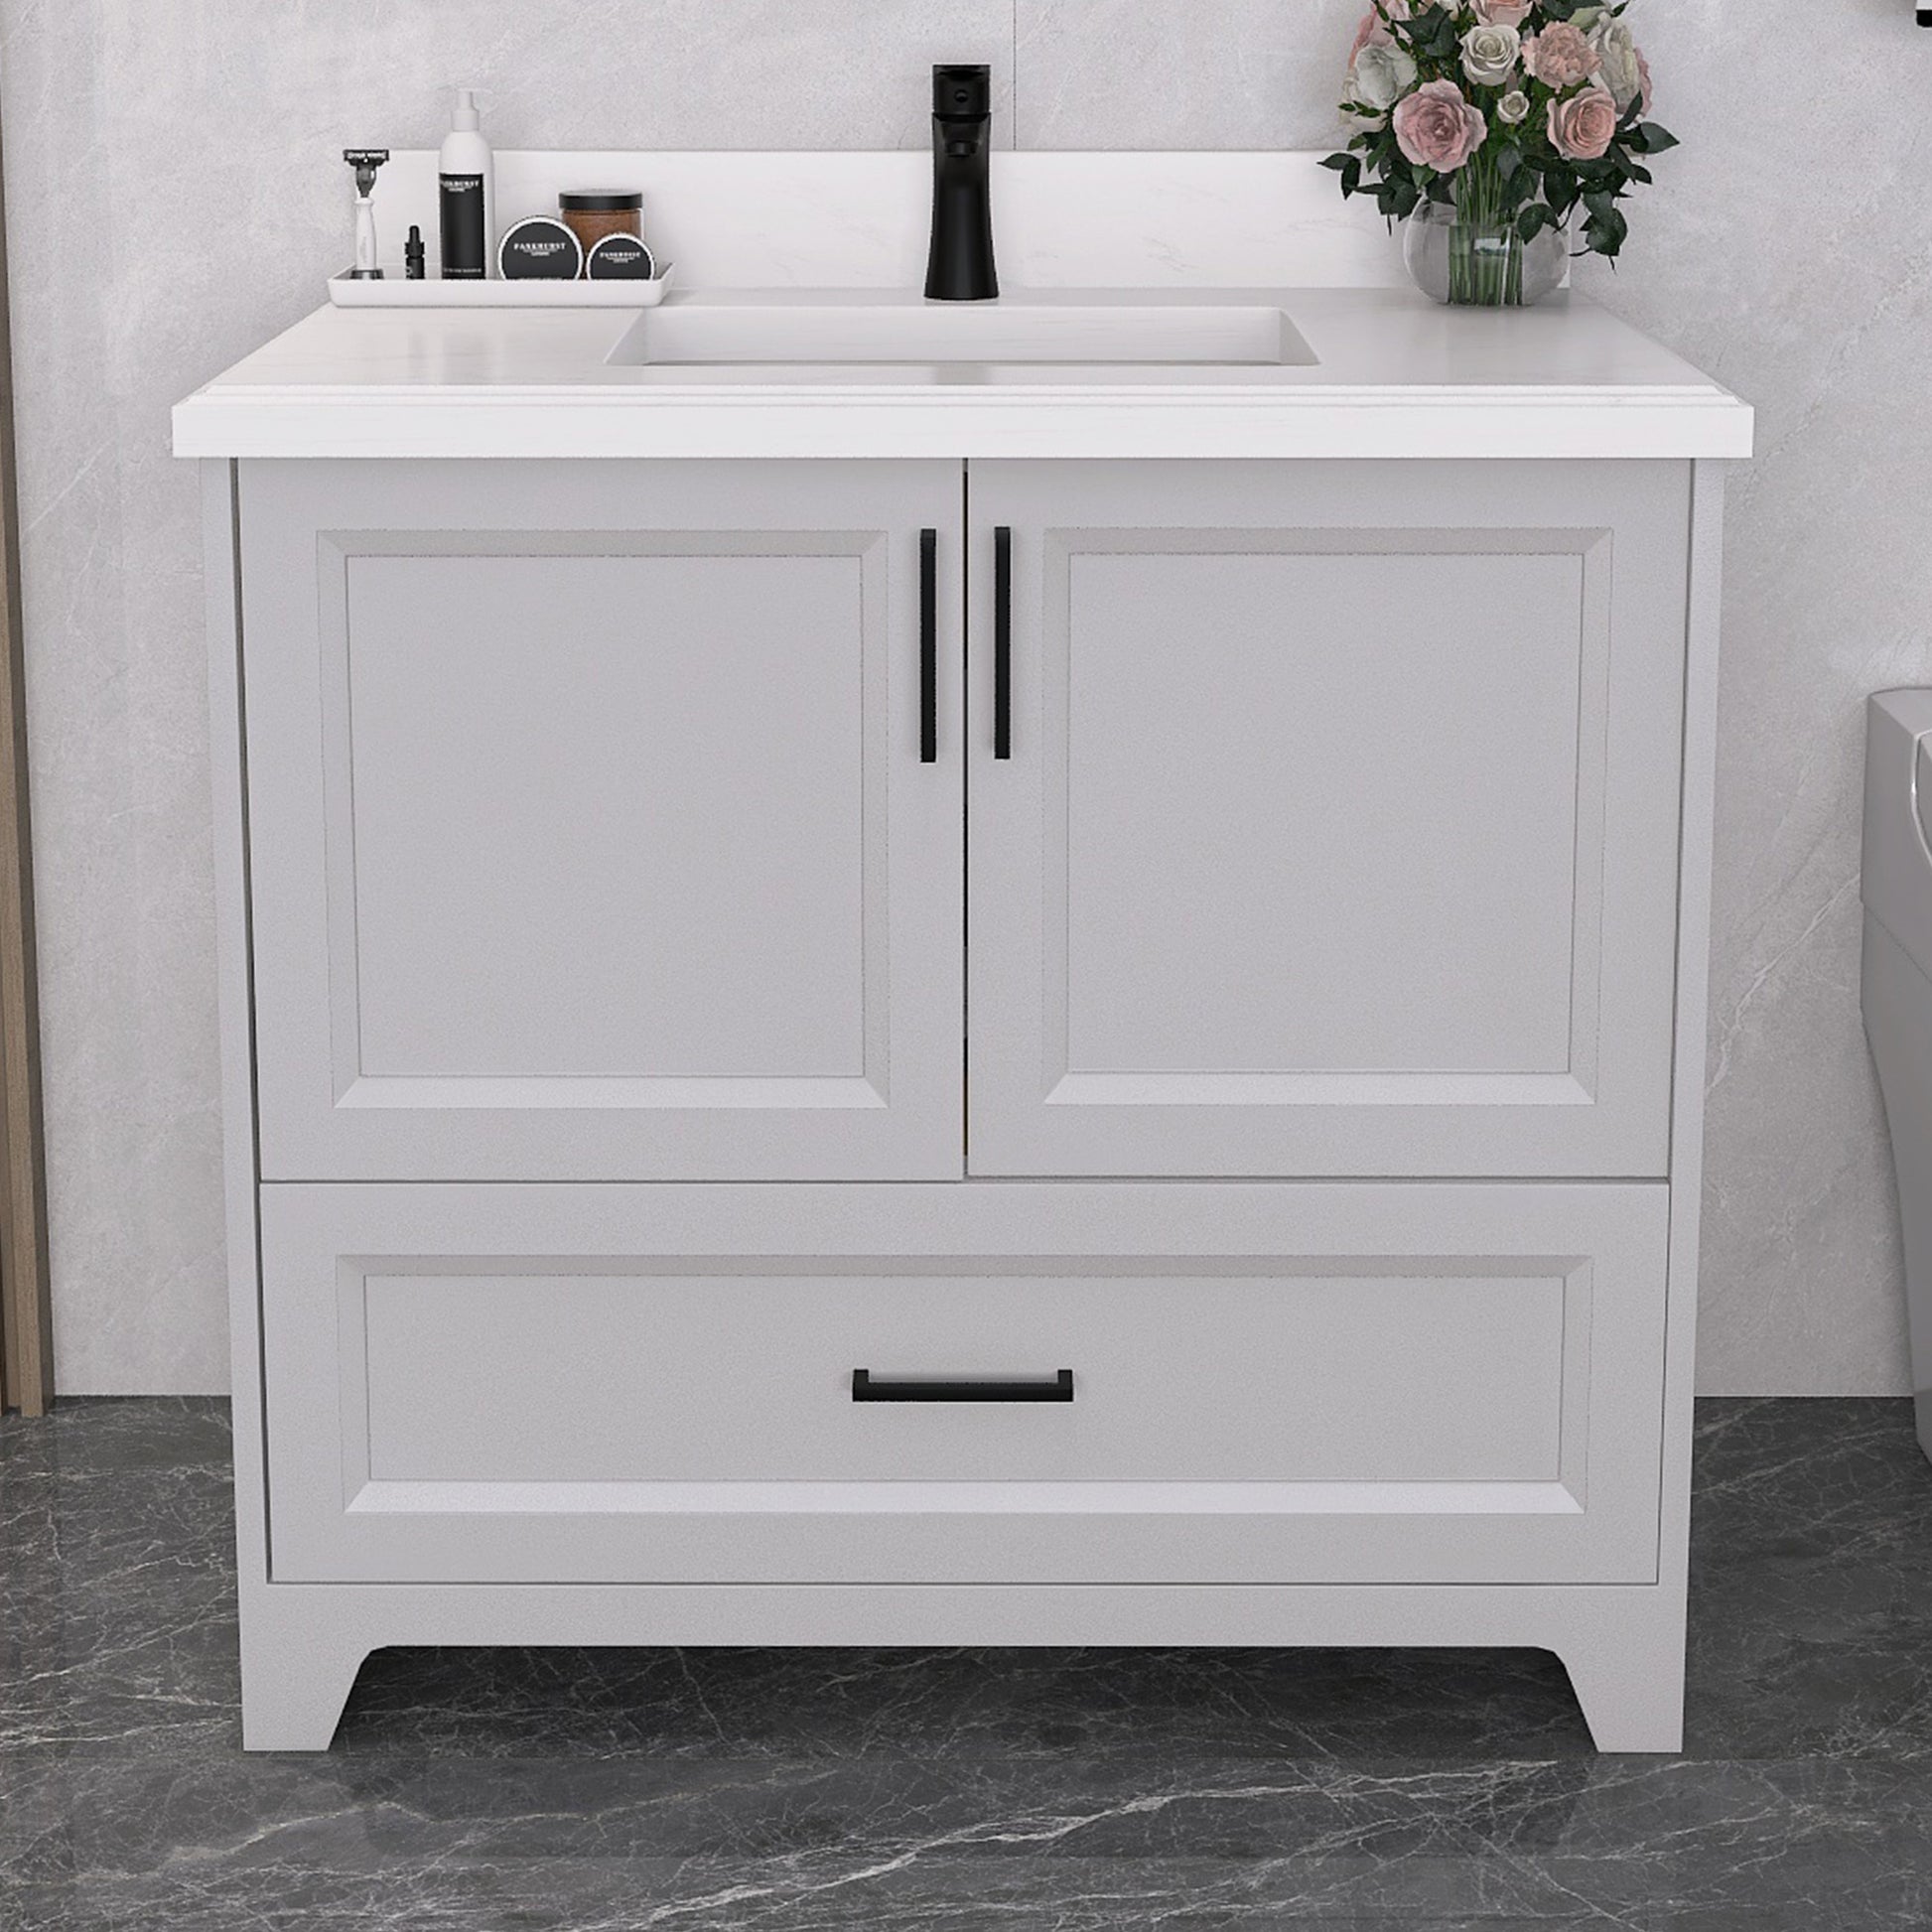 Solid Wood 36" Bathroom Vanity With Sink Combo,